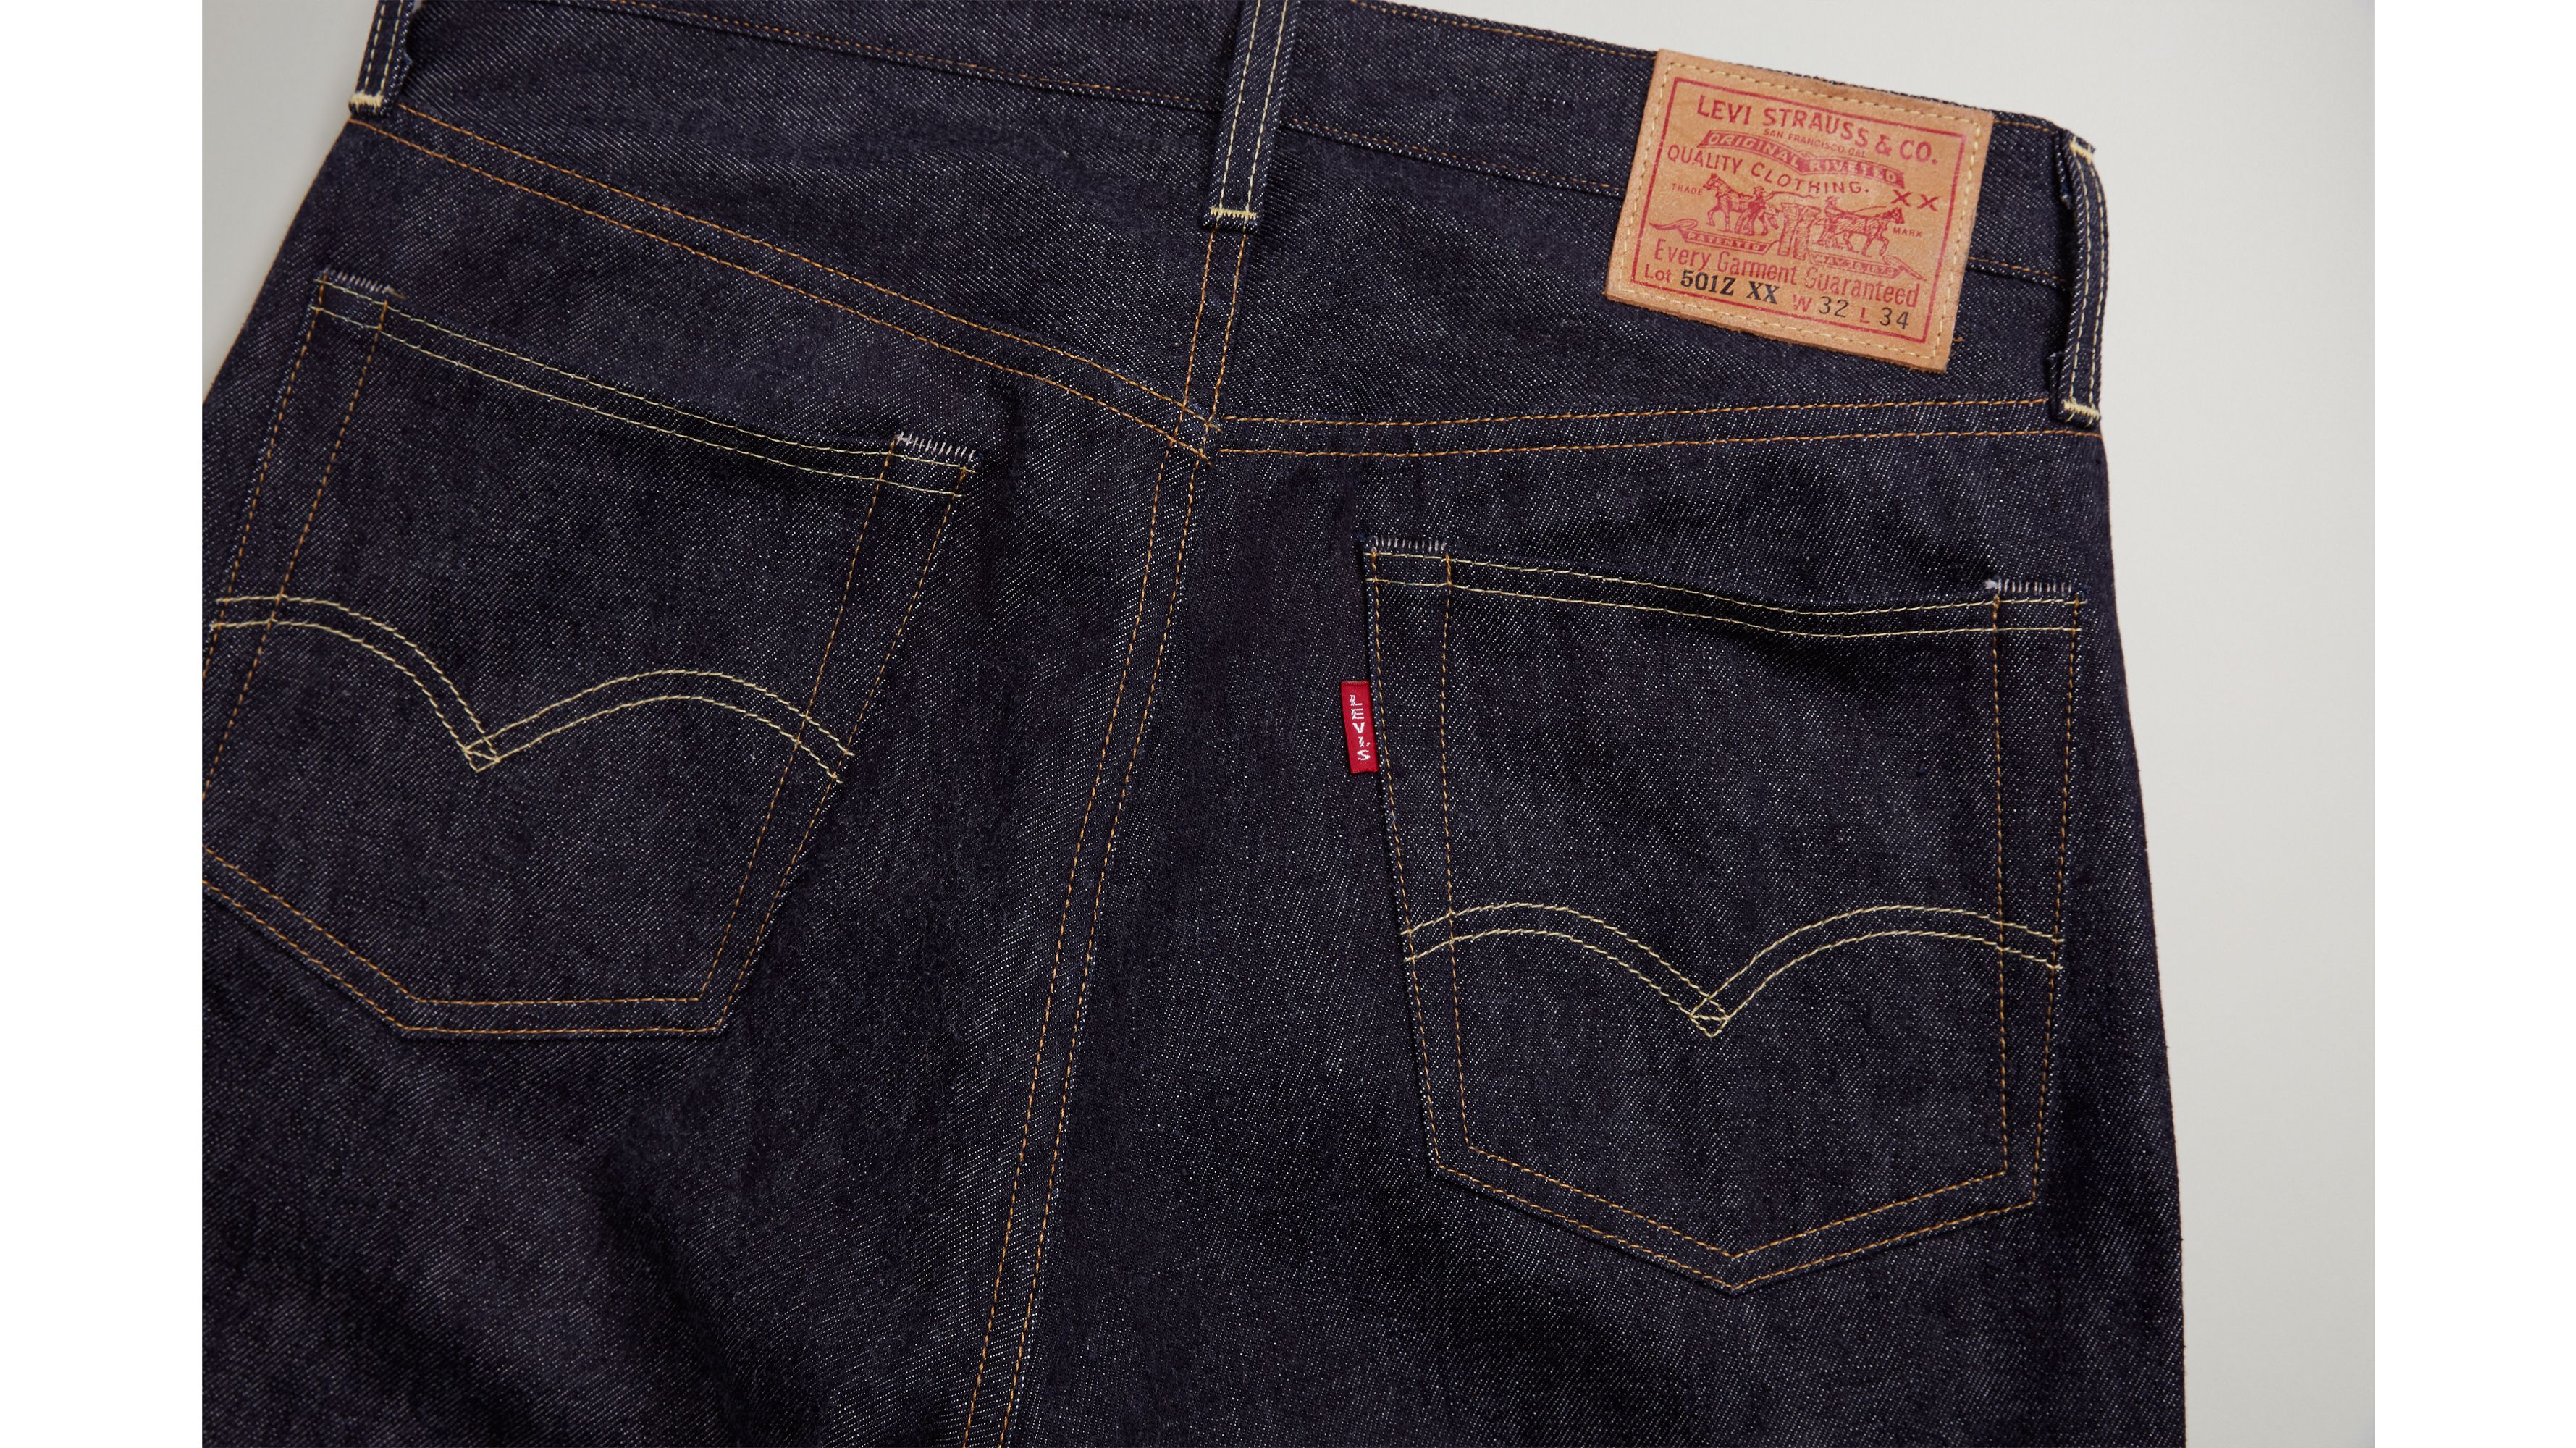 Levi's Vintage 501z 1954 Jeans Ships Same Day!